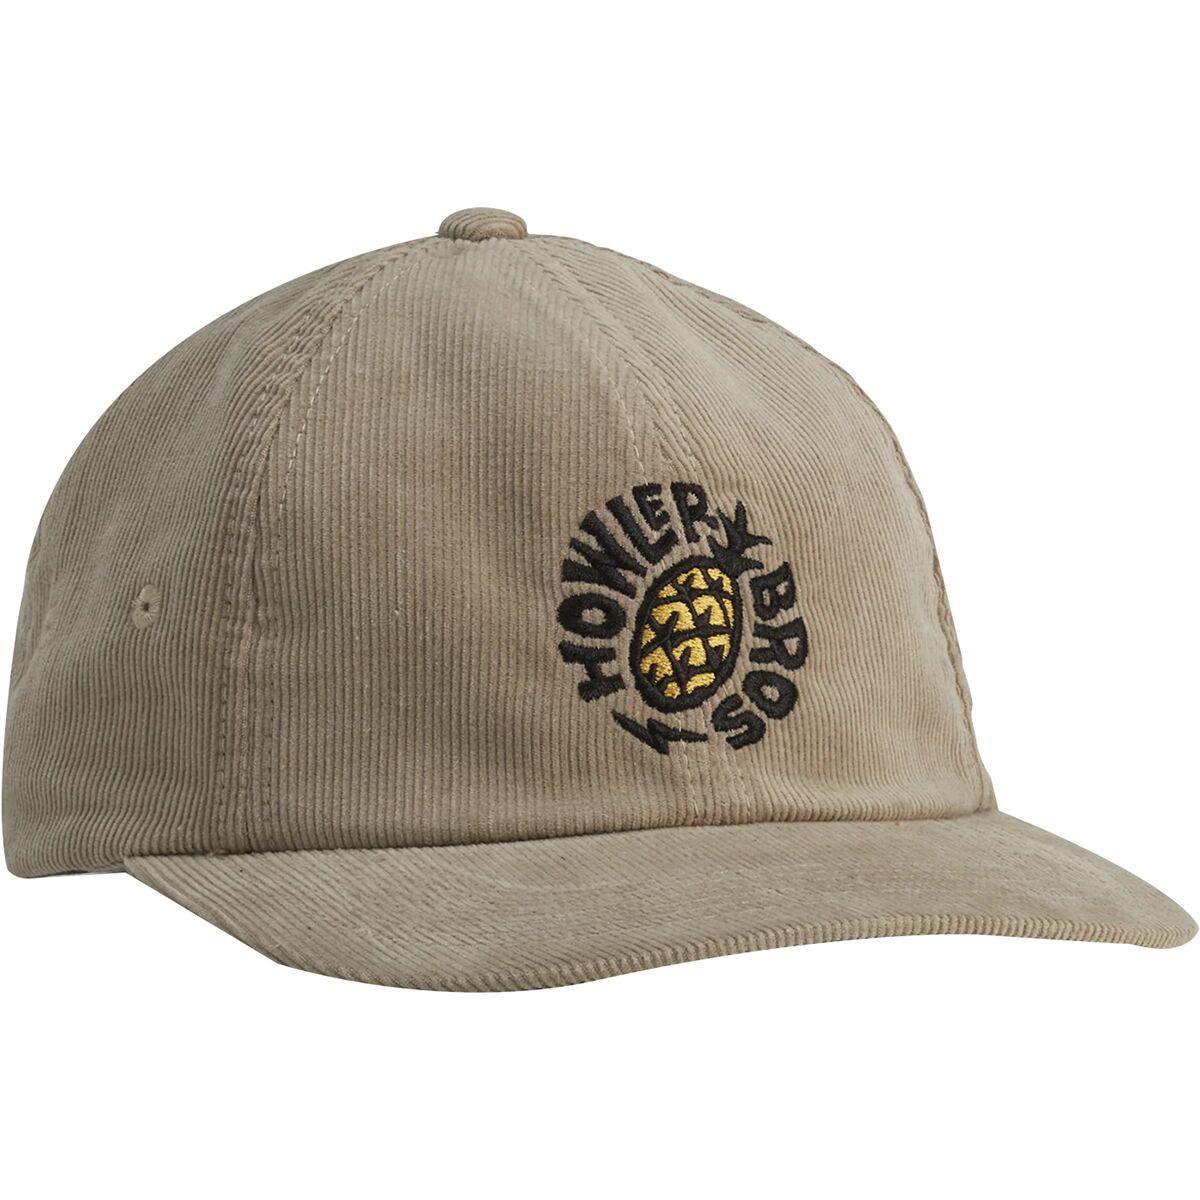 Howler Brothers Pineapple Badge Strapback Hat